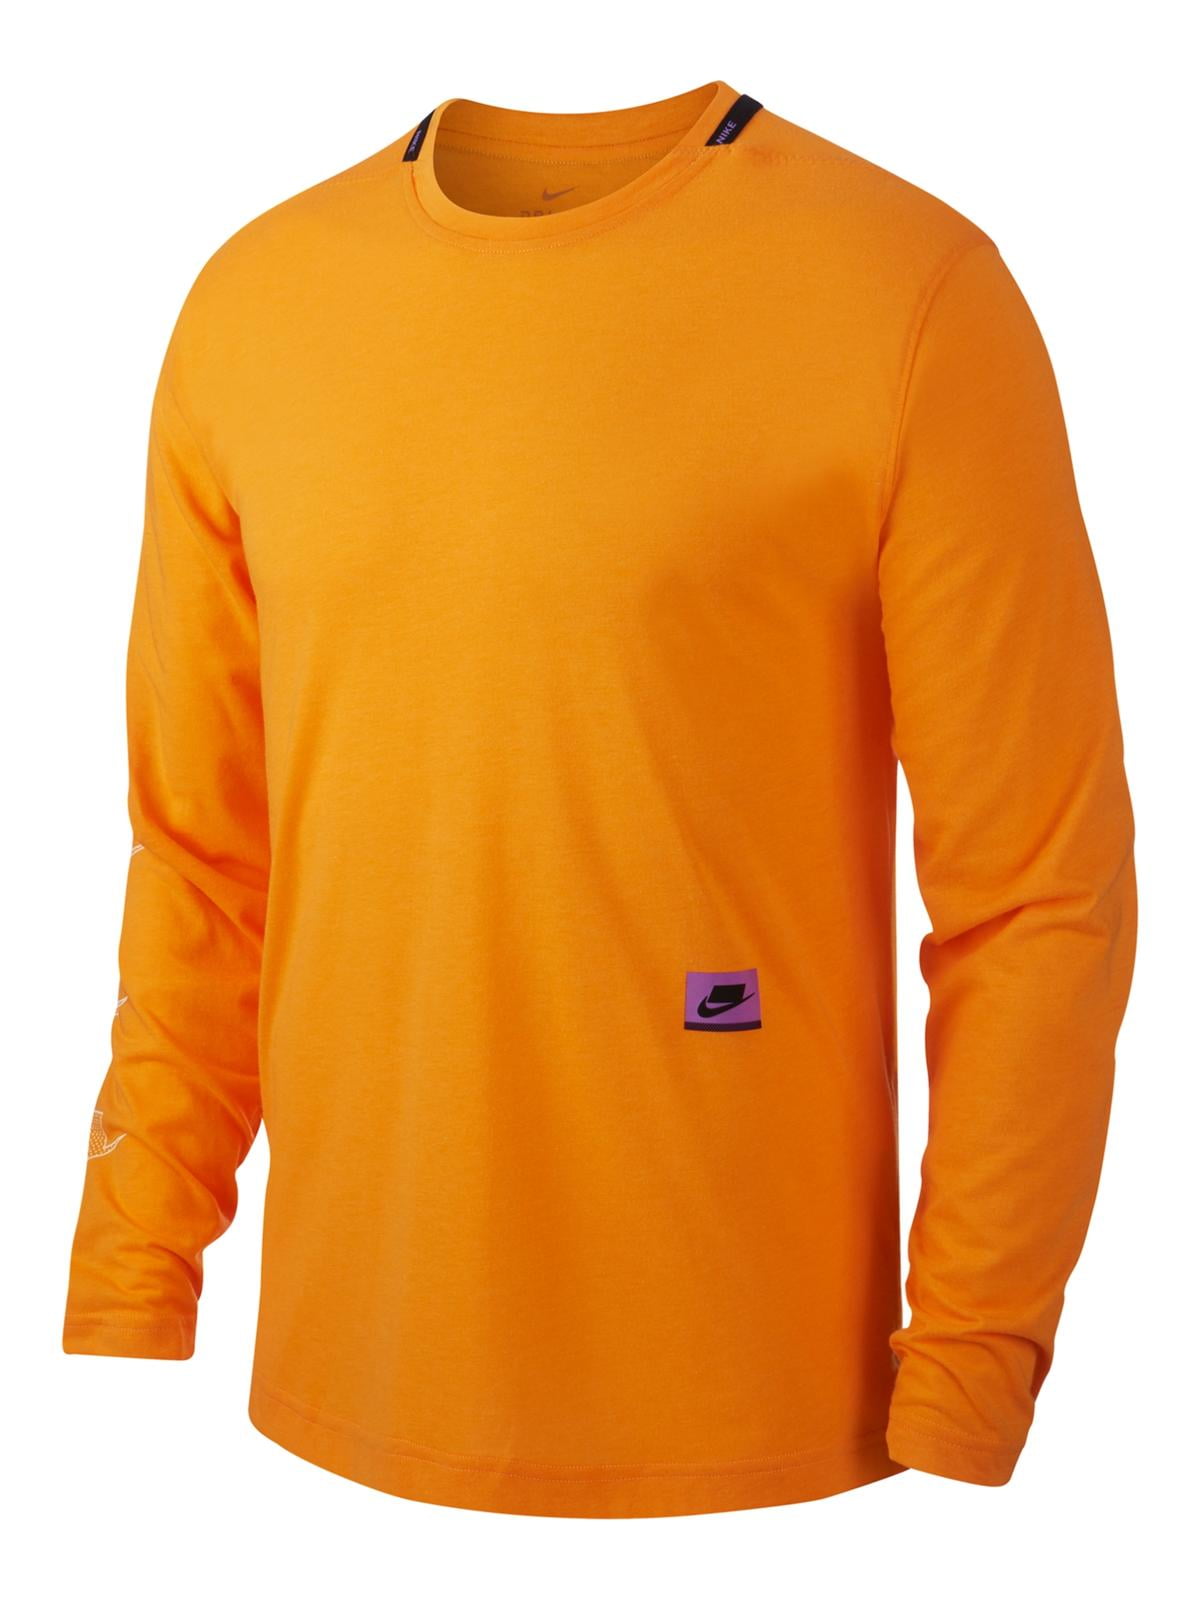 Halar Engreído República Nike Men's Dri-FIT Long-Sleeve Training Top Orange Size Medium - Walmart.com